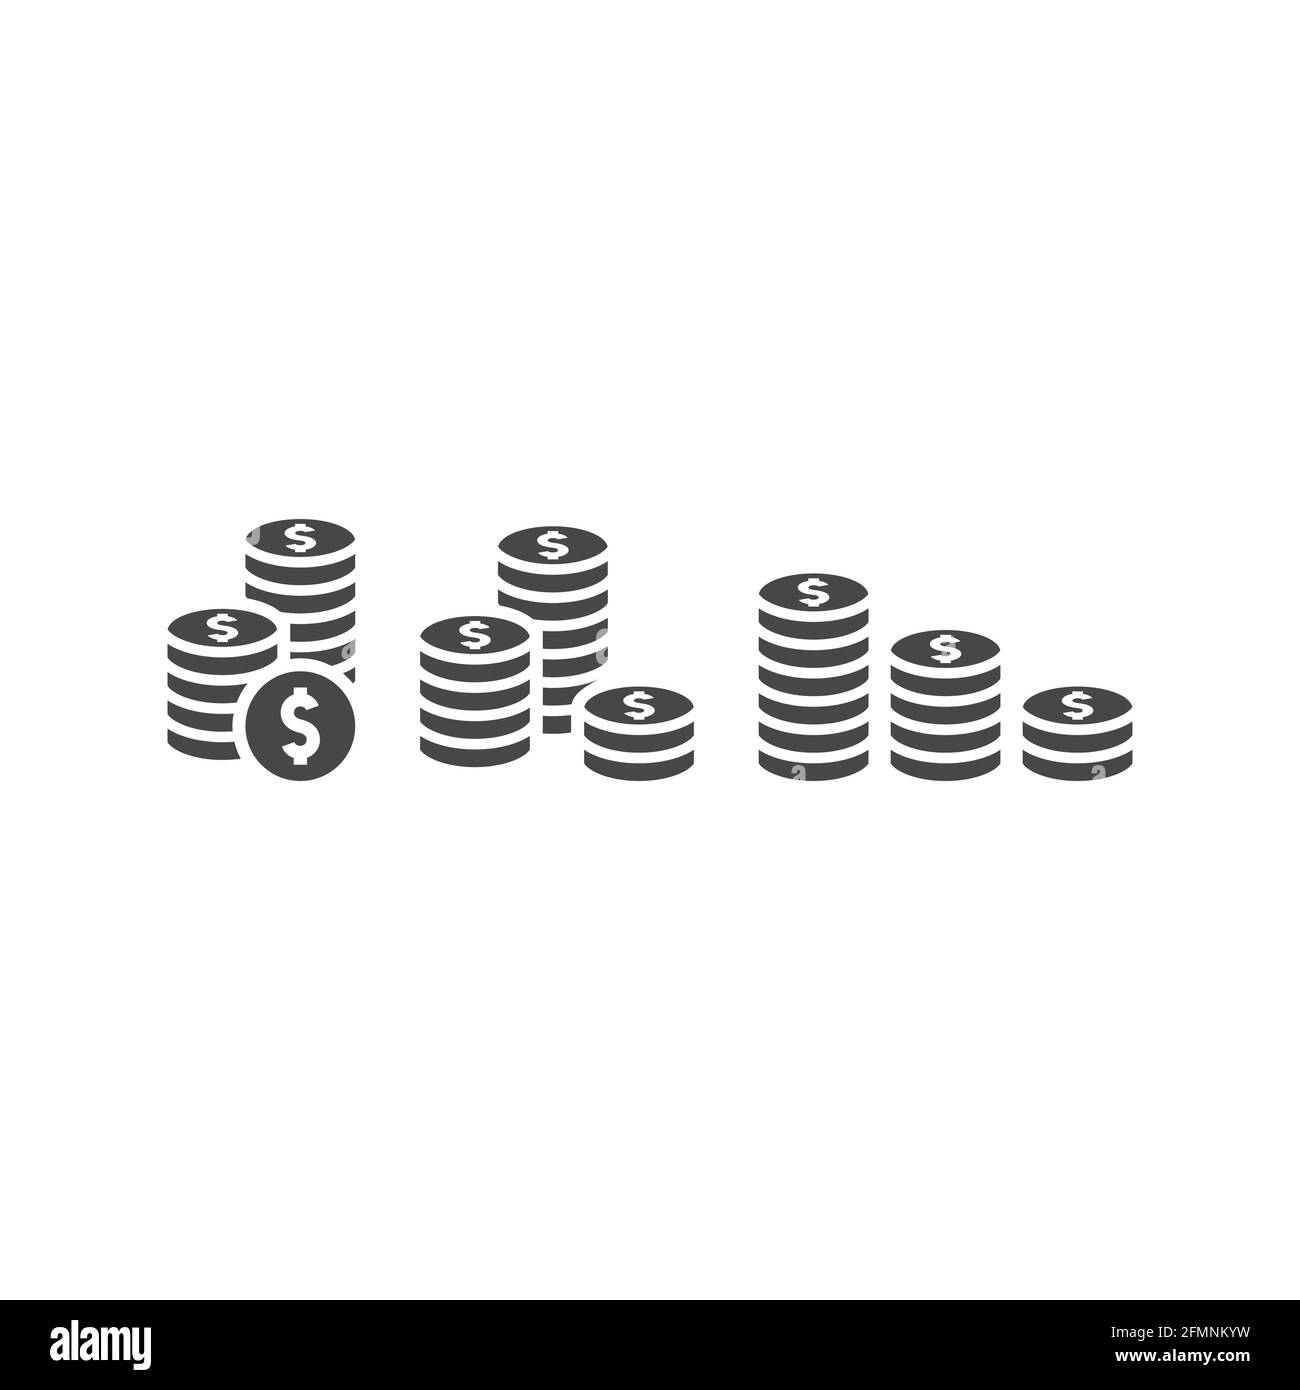 Dollar coin stack black vector icon. Money, savings or earnings symbol. Stock Vector